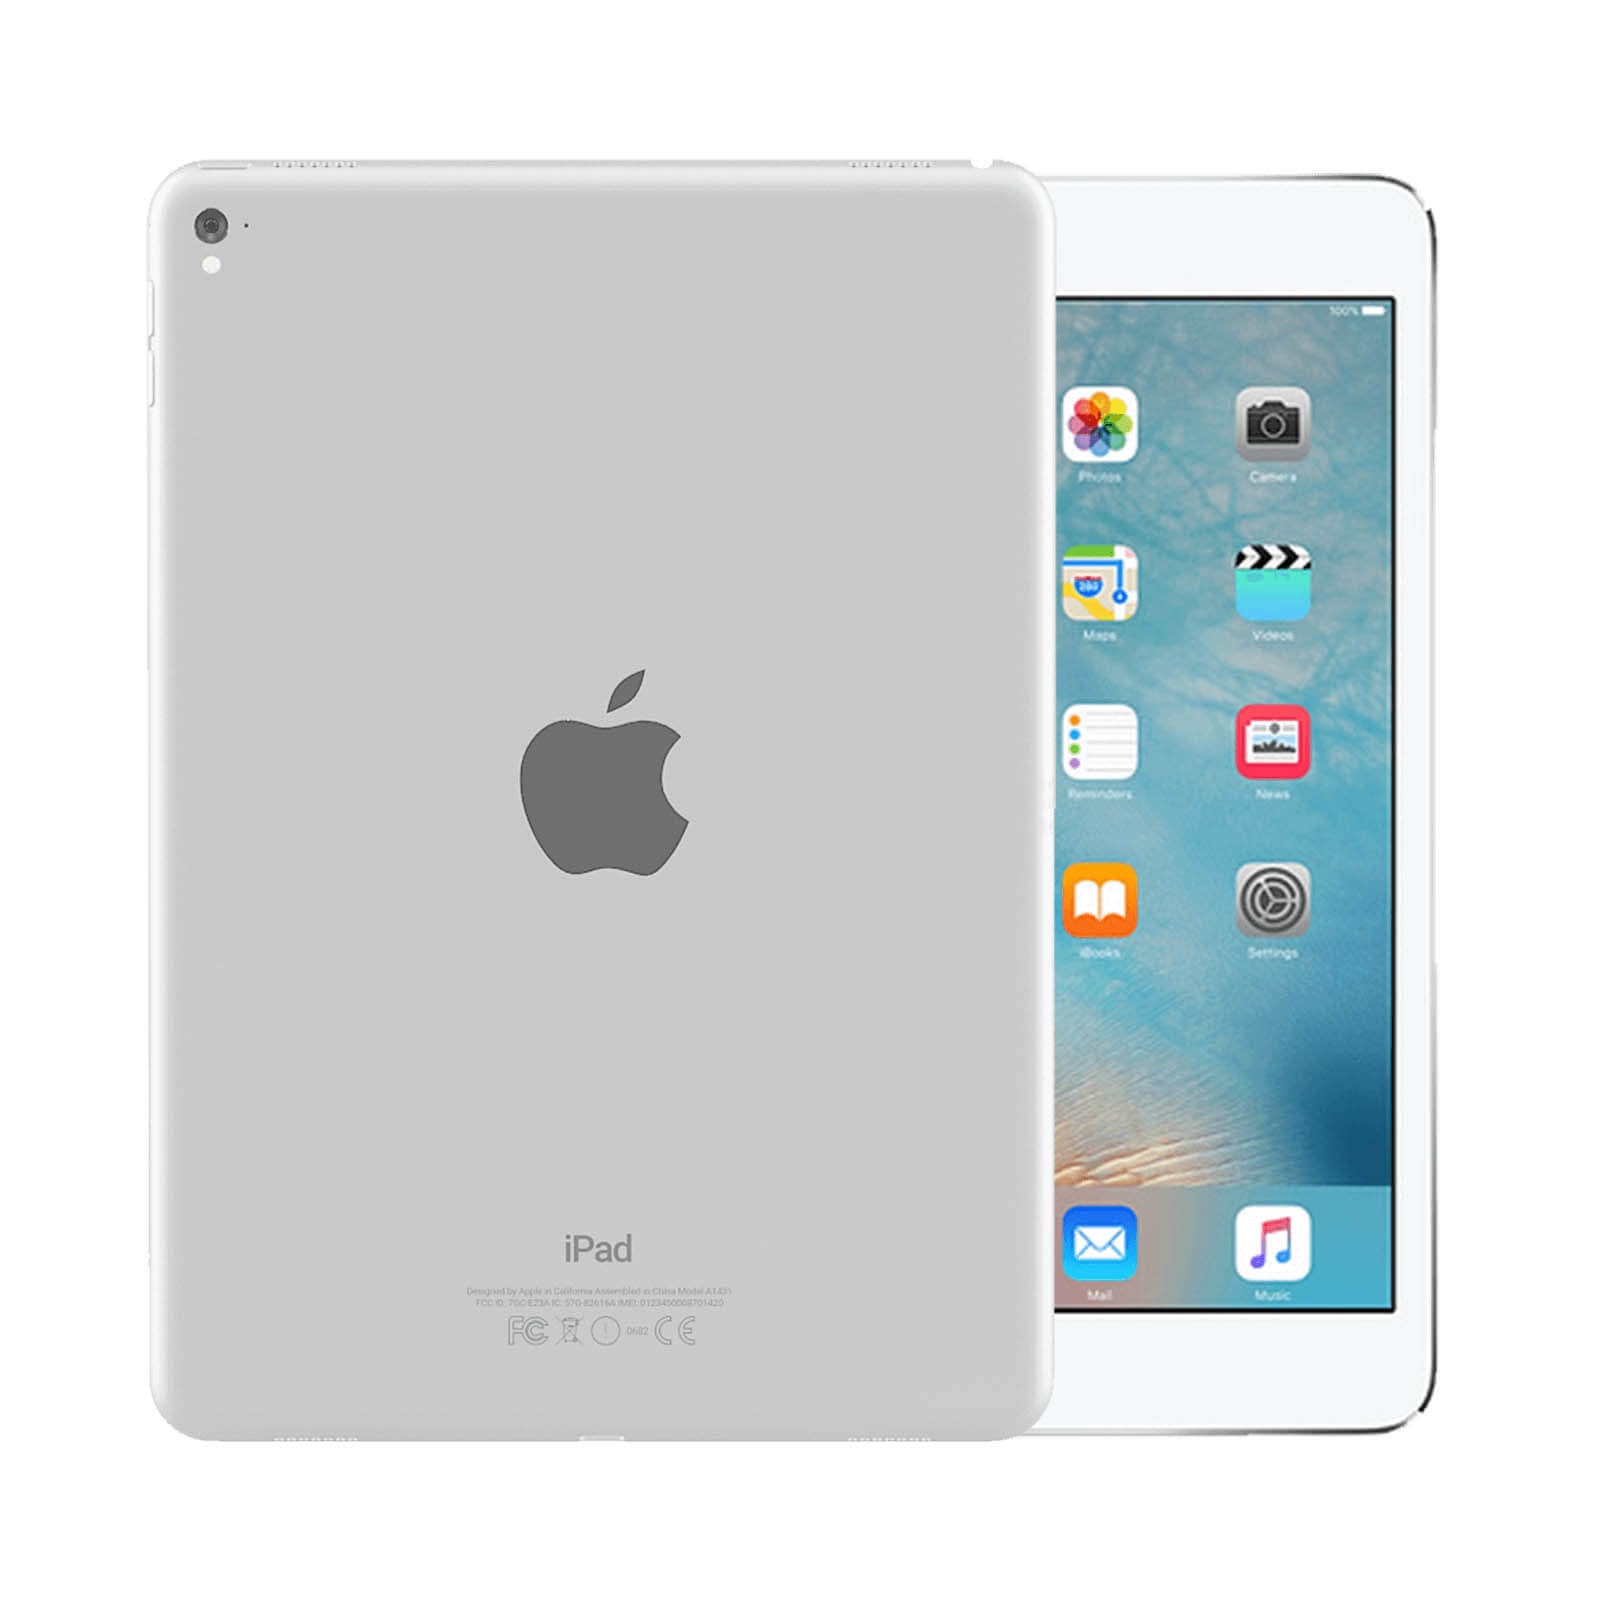 iPad Pro 9.7 WiFi Cellular 128GBローズゴールド